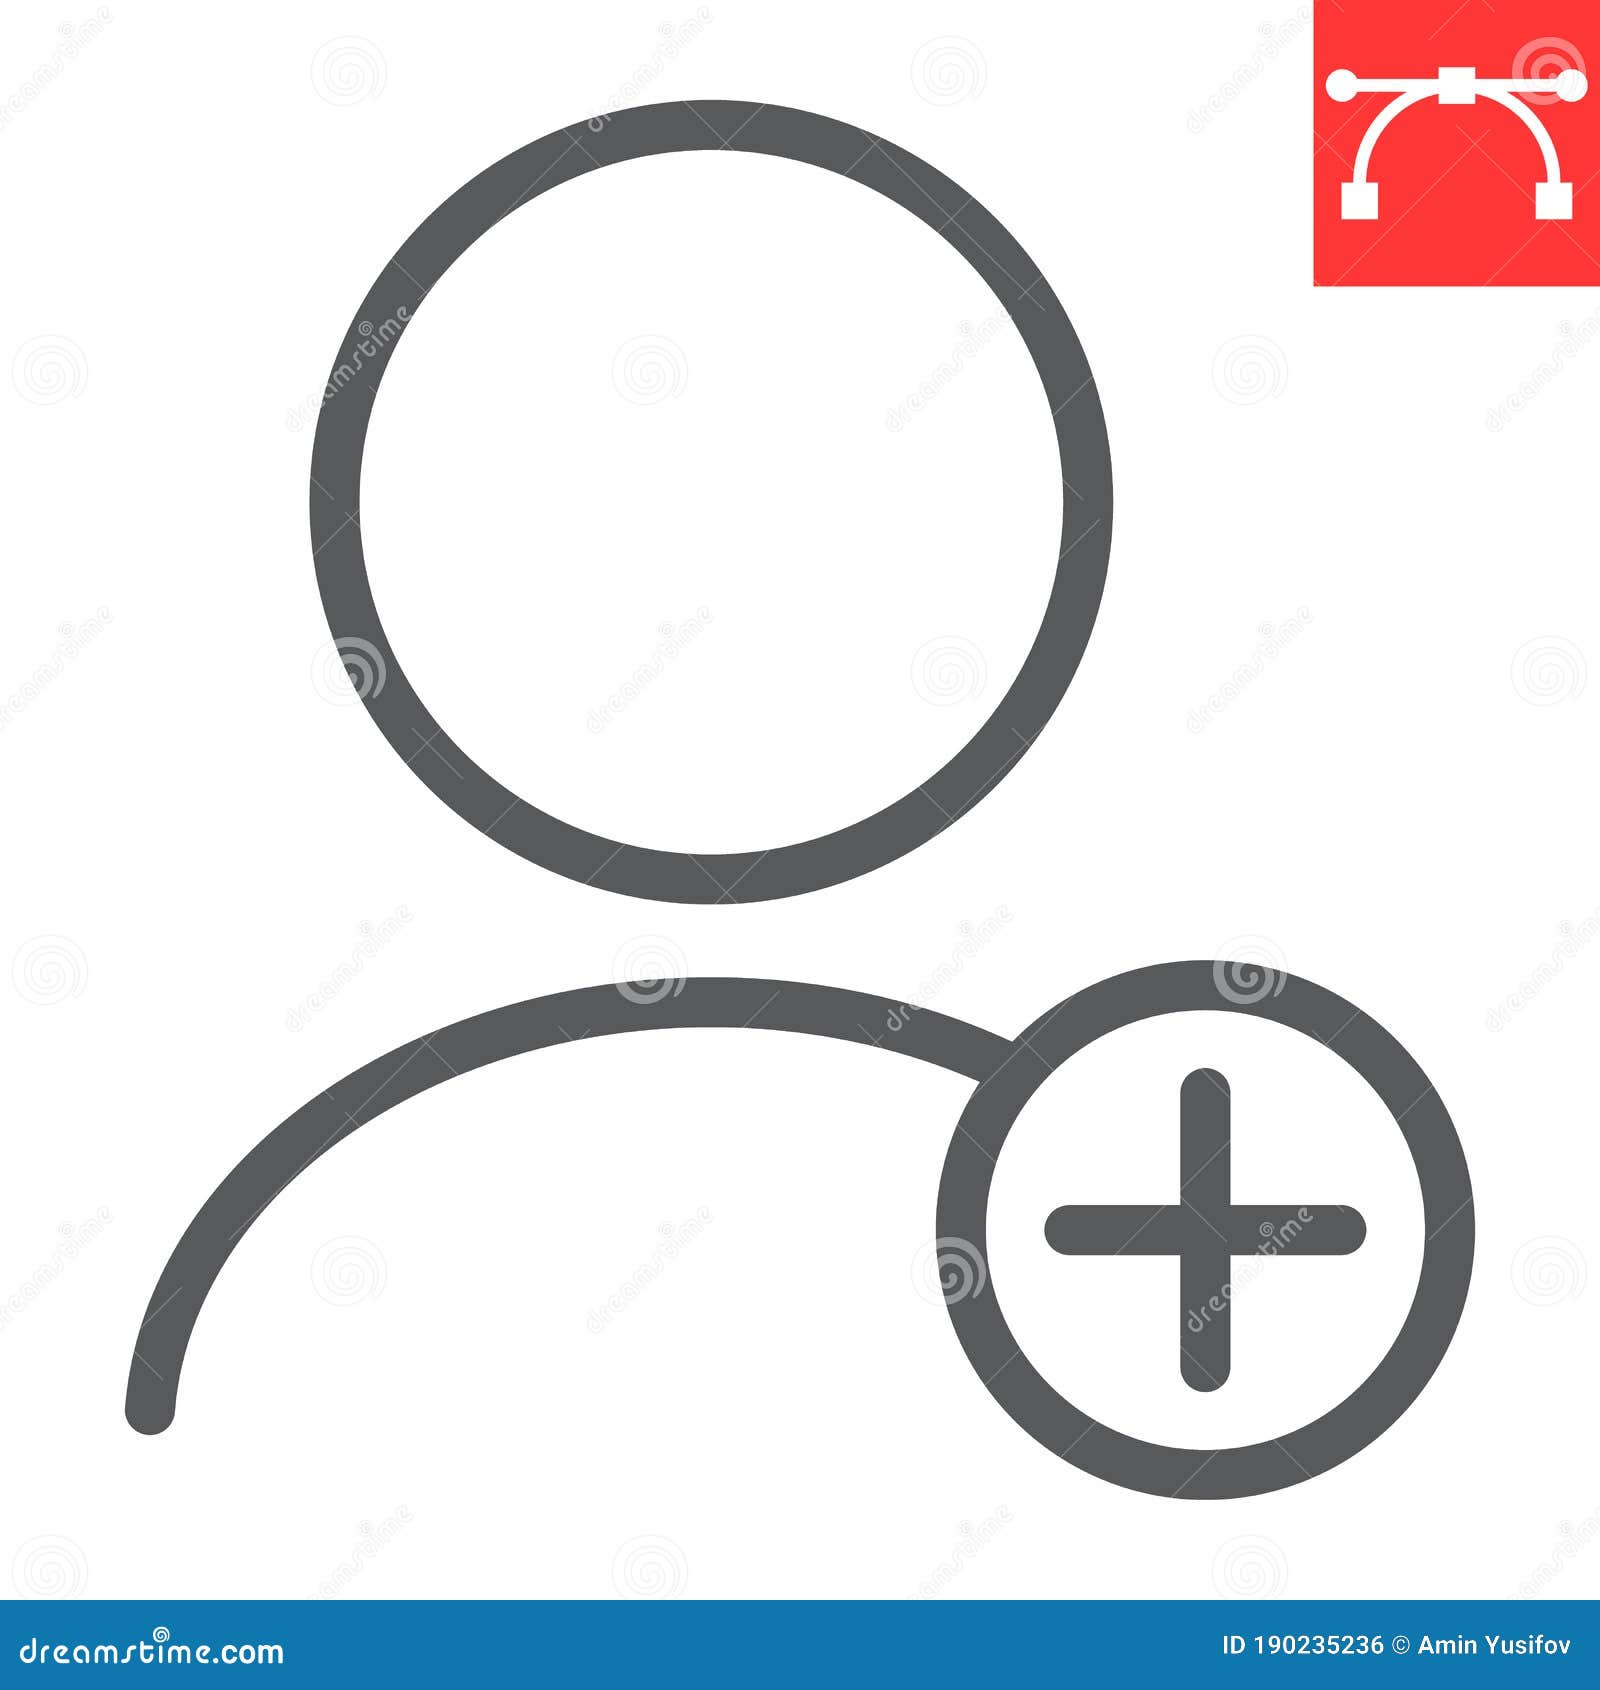 User profile icon. Avatar, user sign icon. Vector EPS 10.